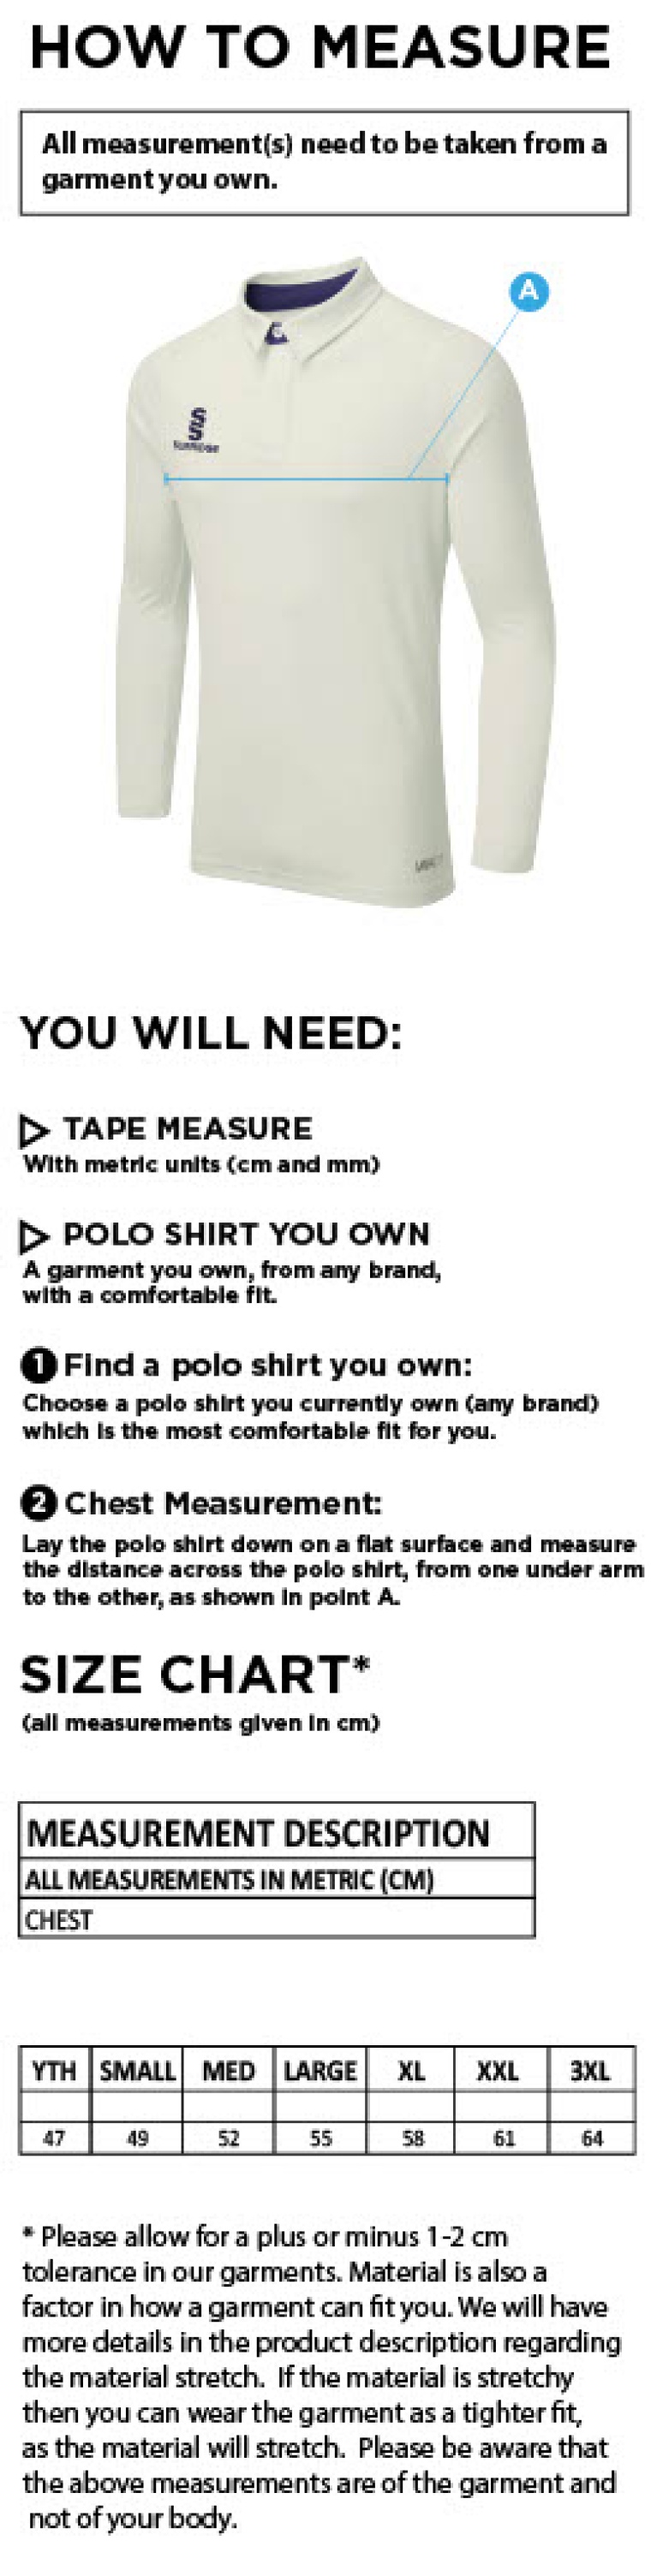 Hutton CC - Long Sleeved Ergo Shirt - Size Guide